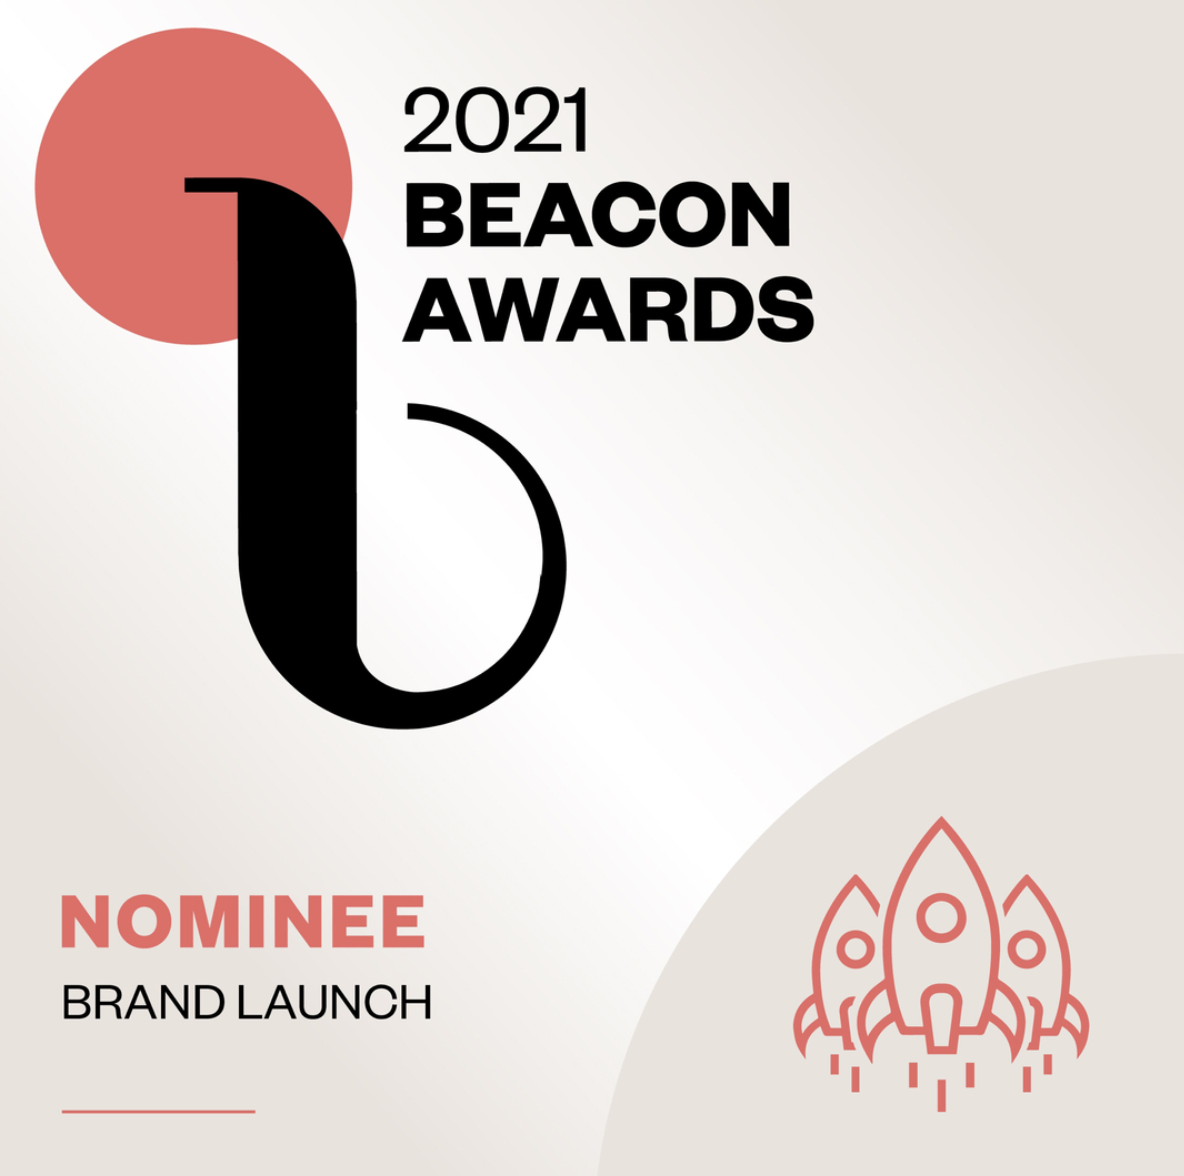 Vamigas Nominated for Beacon Award